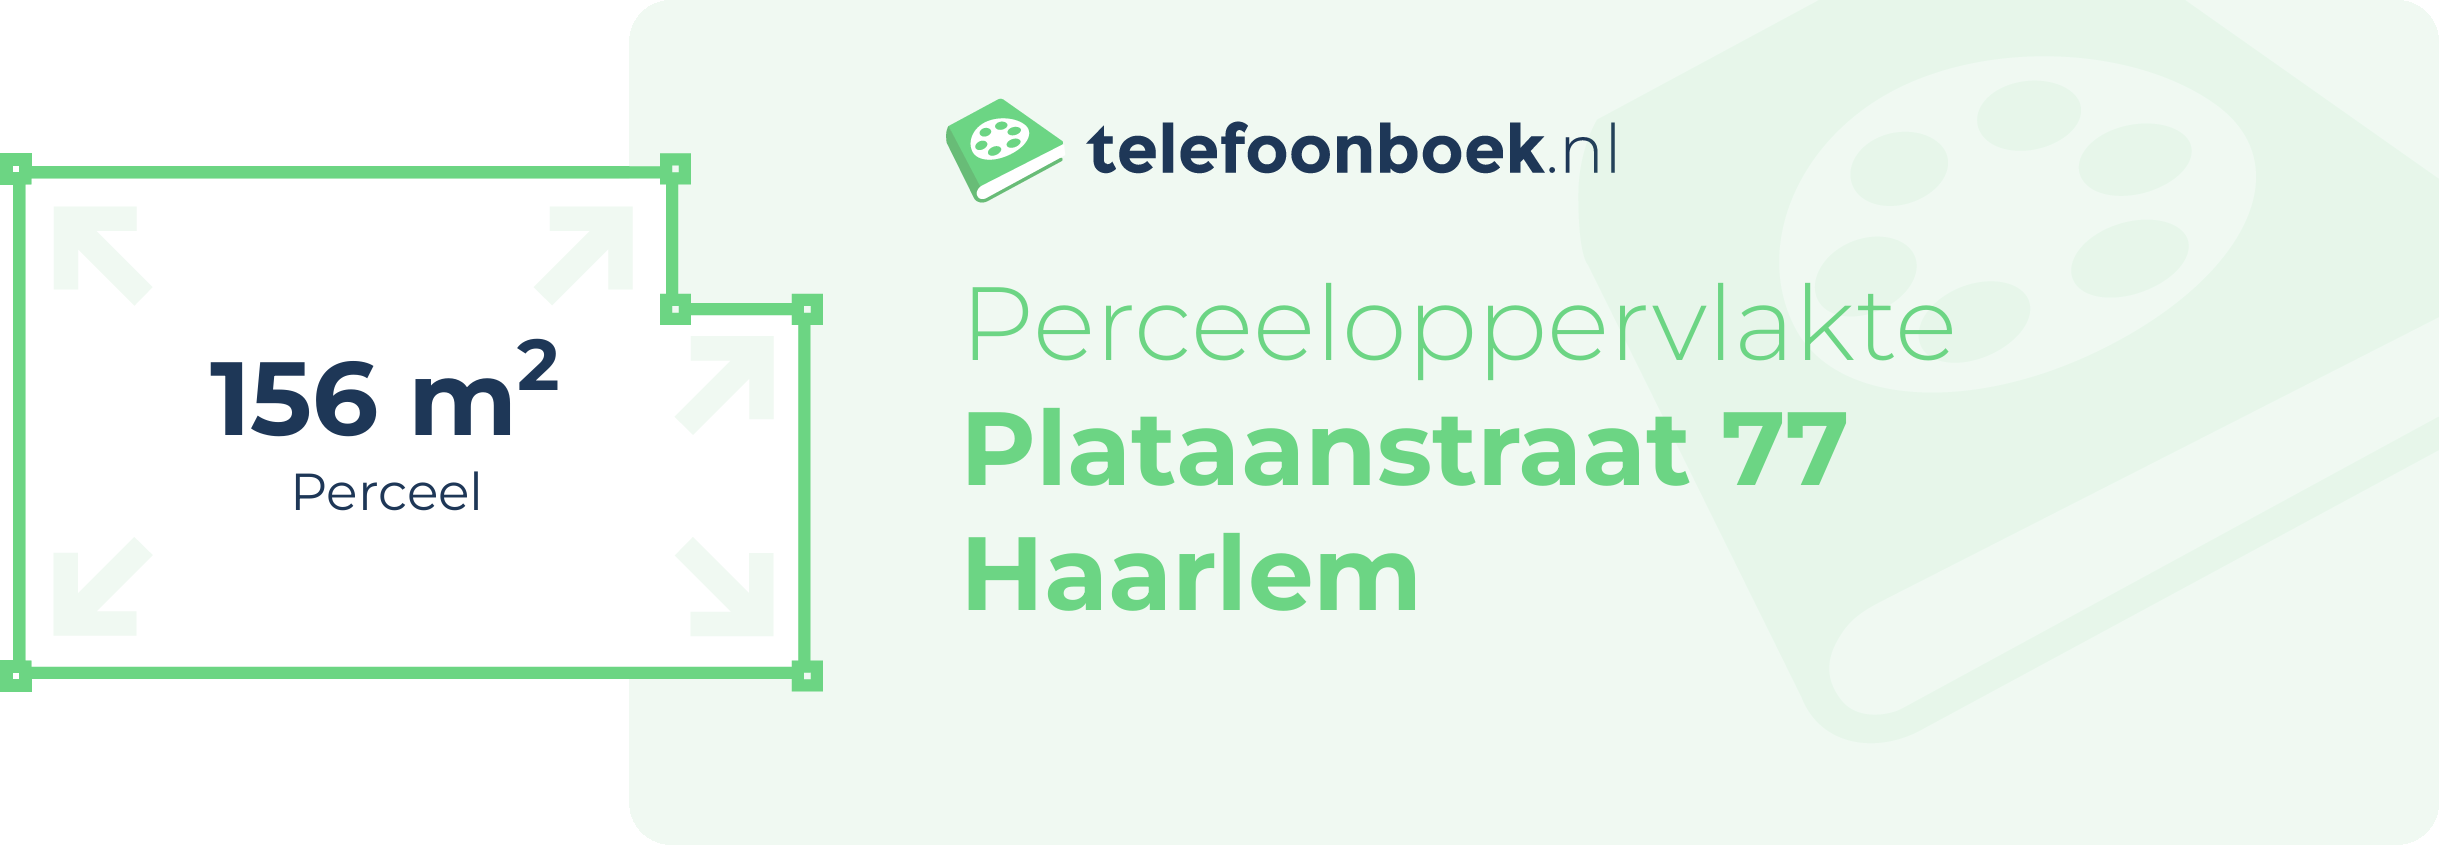 Perceeloppervlakte Plataanstraat 77 Haarlem